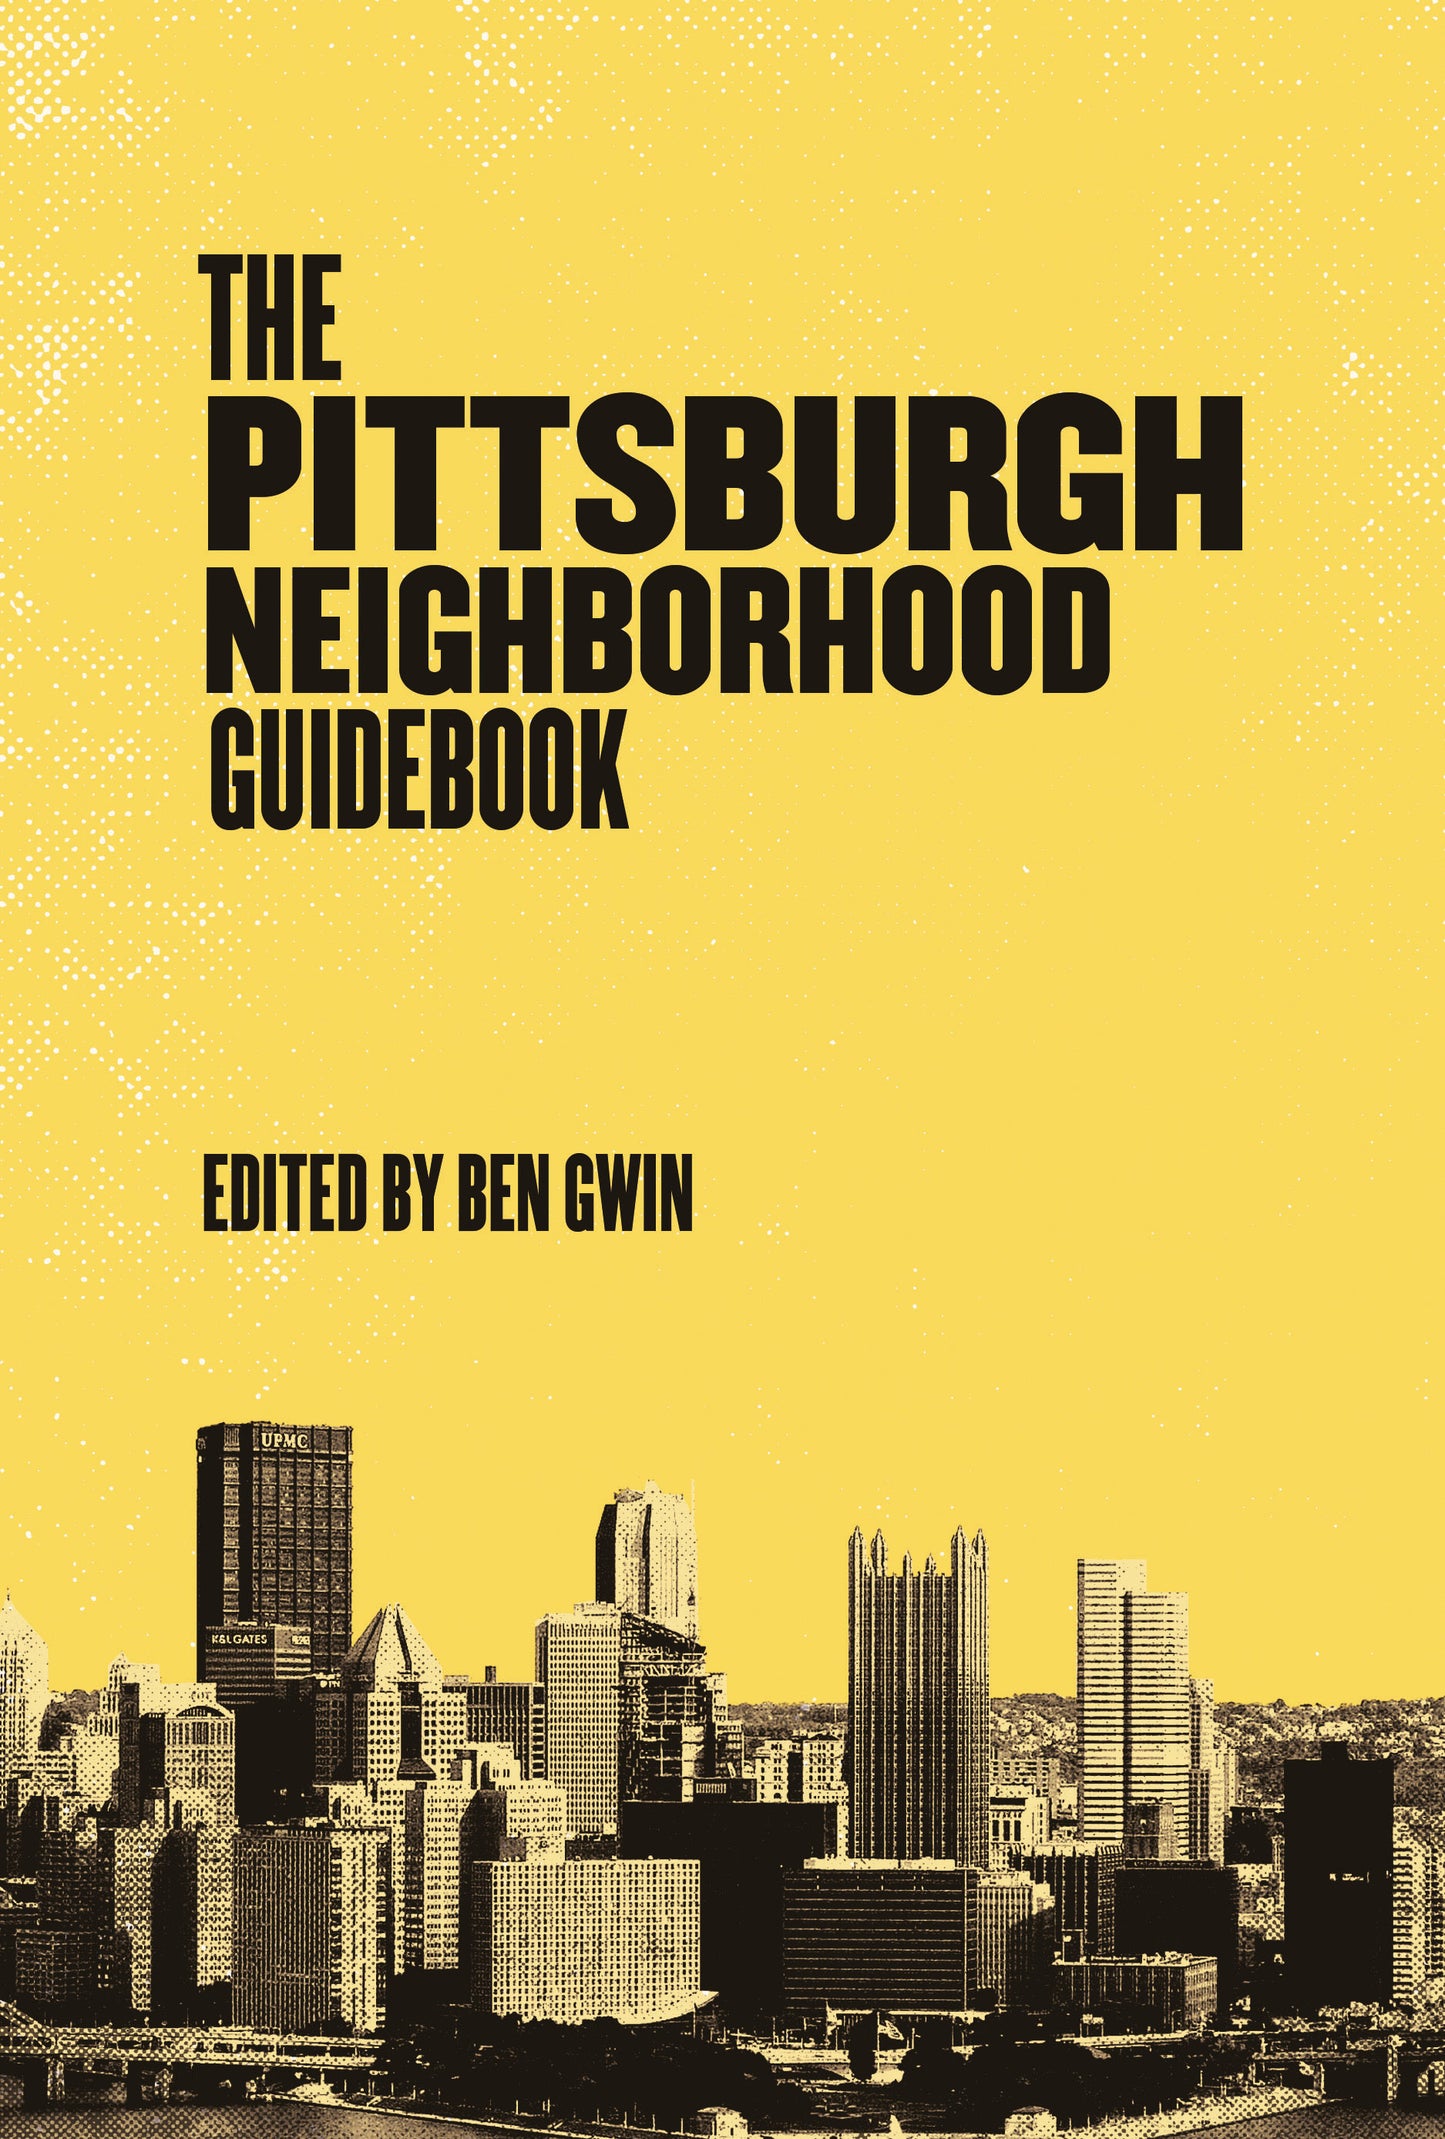 The Pittsburgh Neighborhood Guidebook